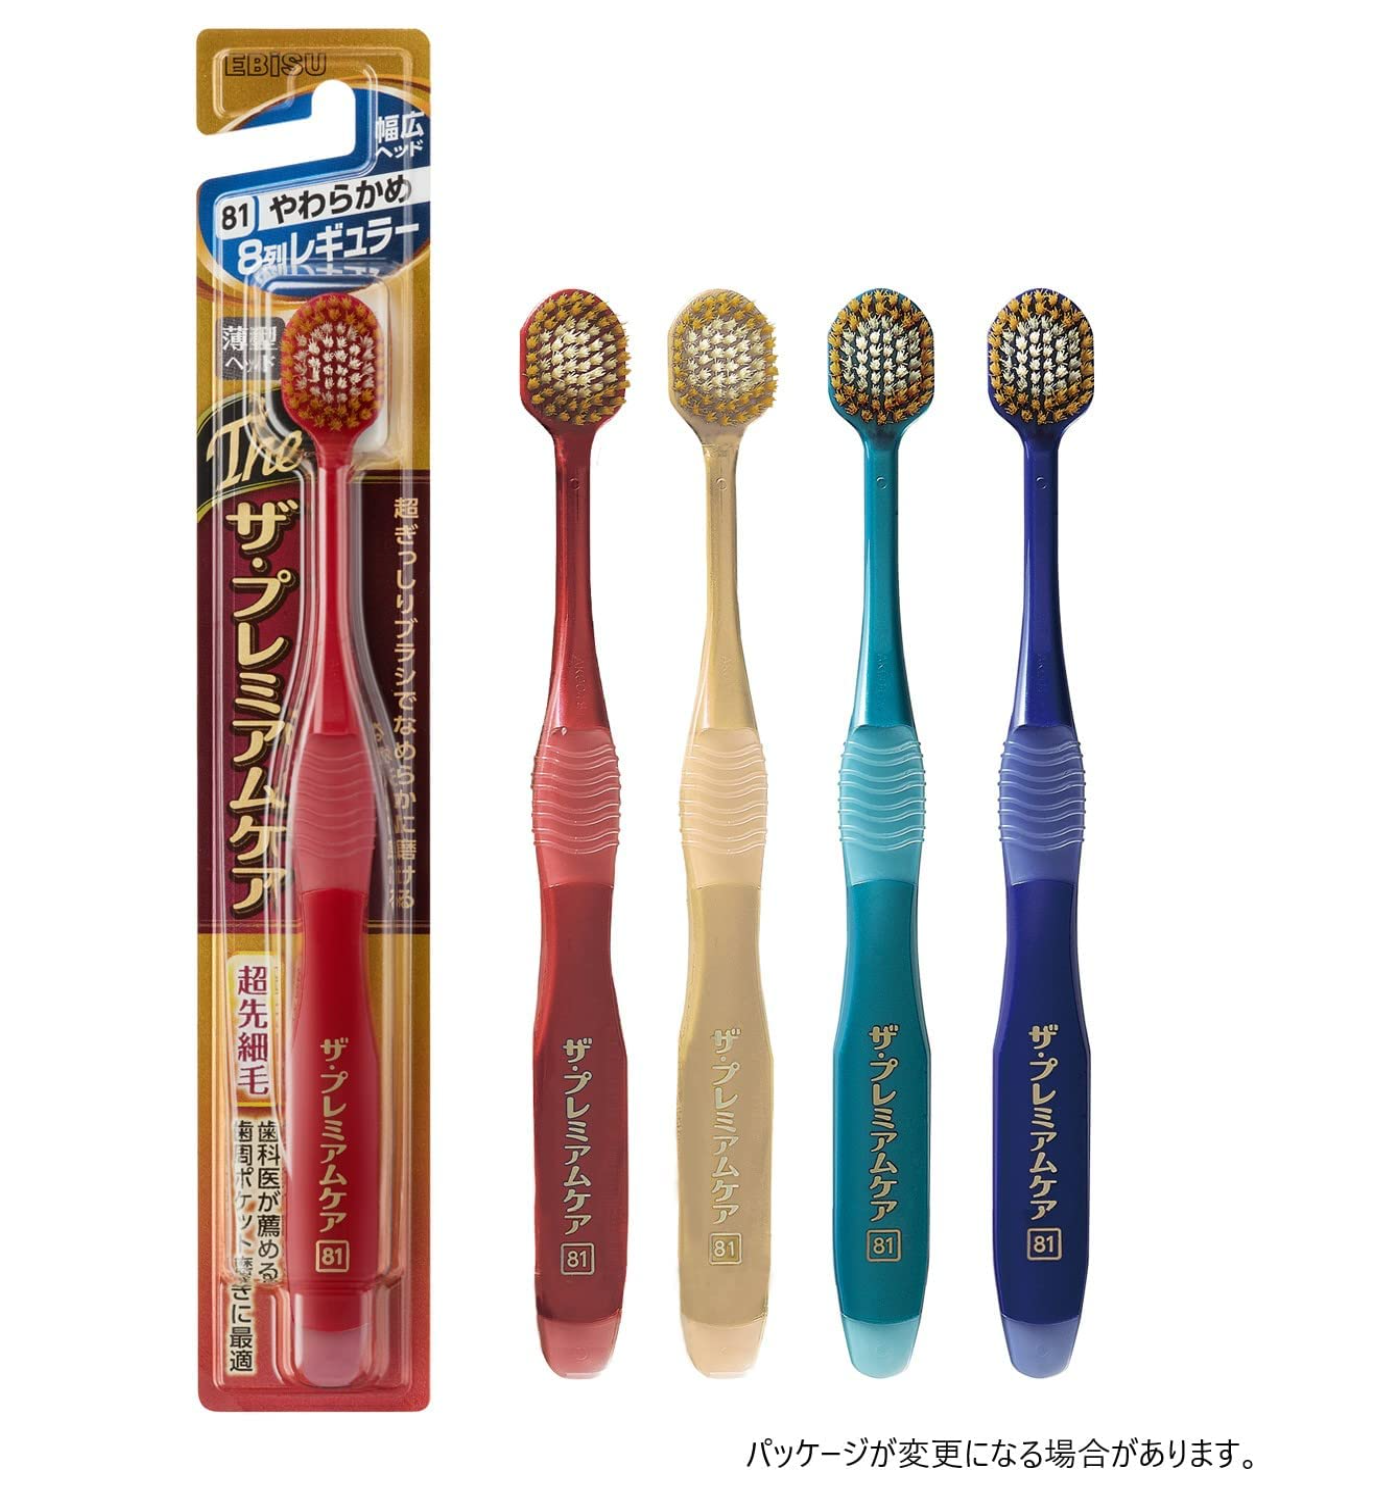 EBISU 惠百施 日本百年品牌 Premiumcare牙刷 80号8列宽头牙刷特别柔软款 3只装 颜色随机发送